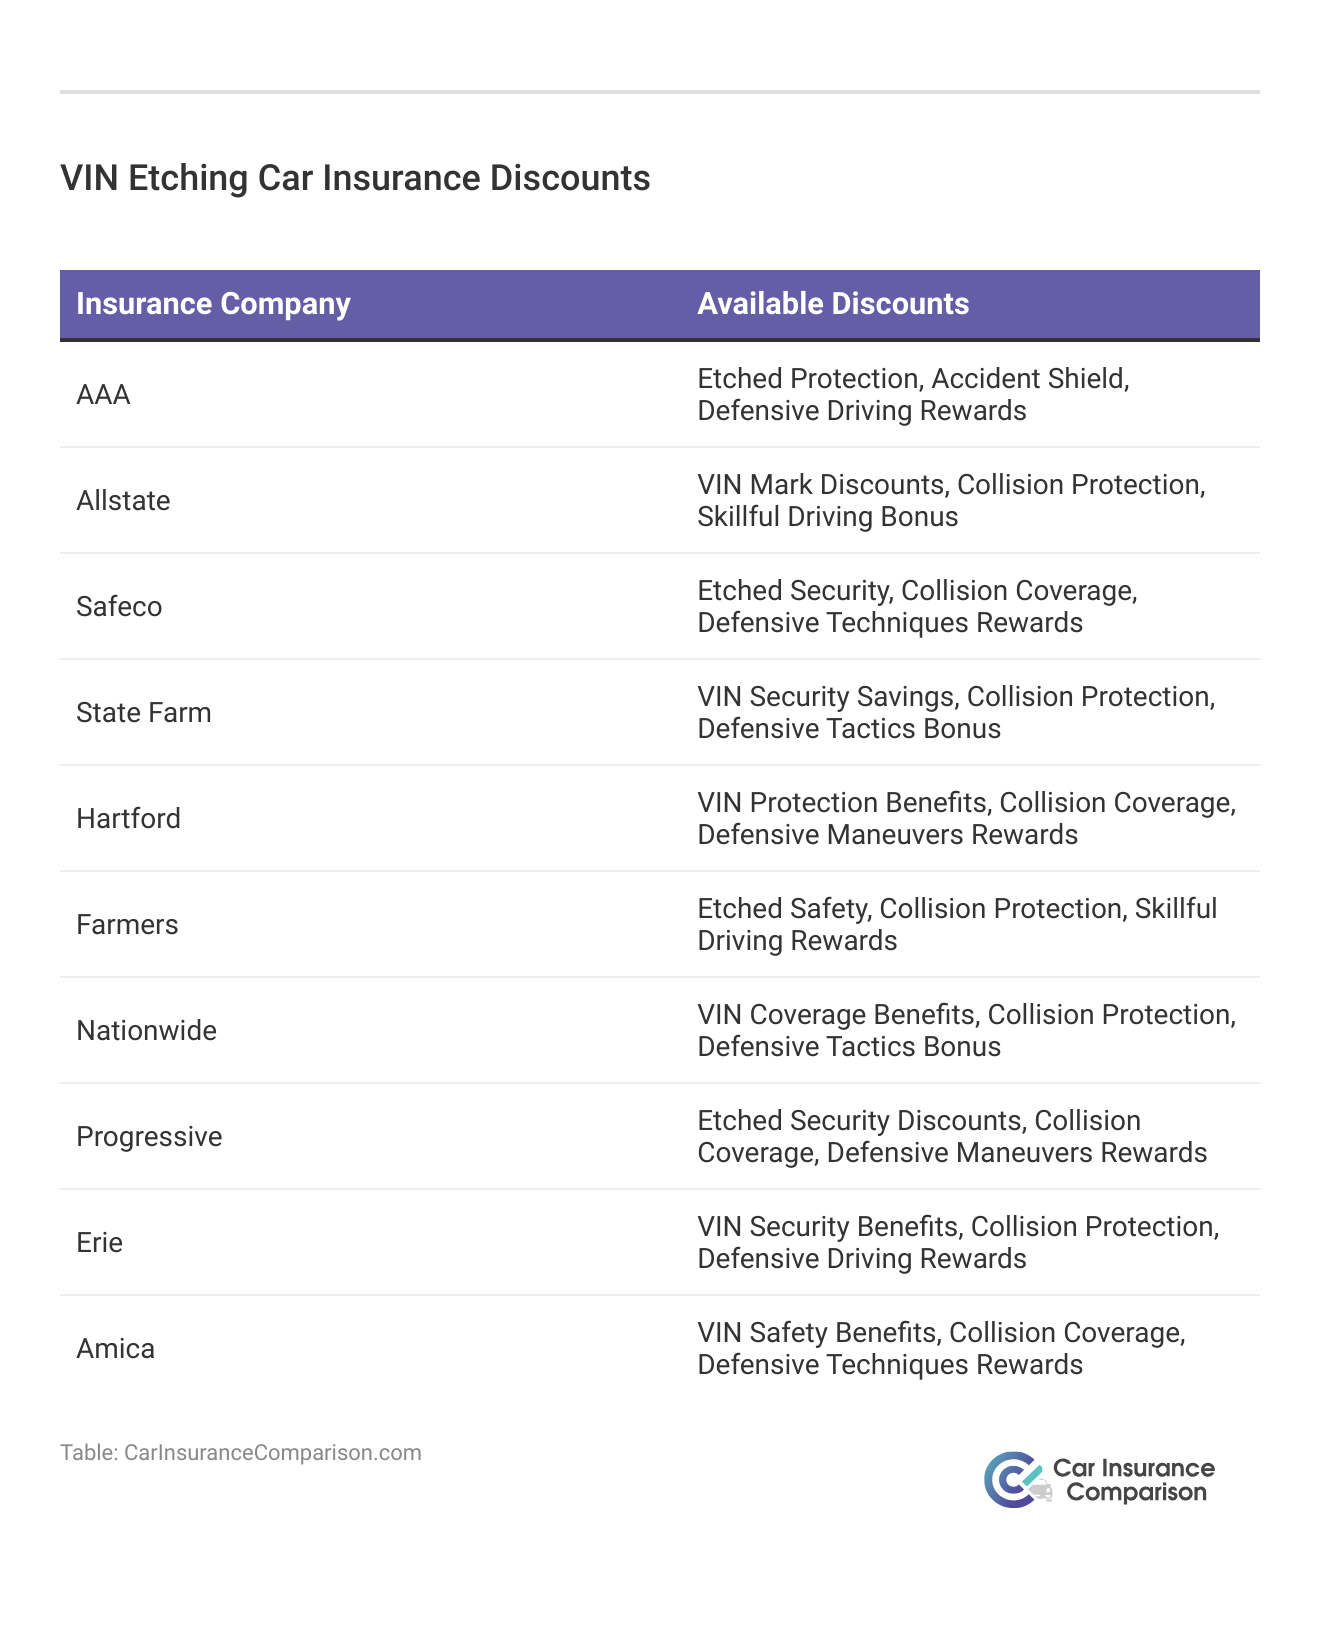 <h3>VIN Etching Car Insurance Discounts</h3>